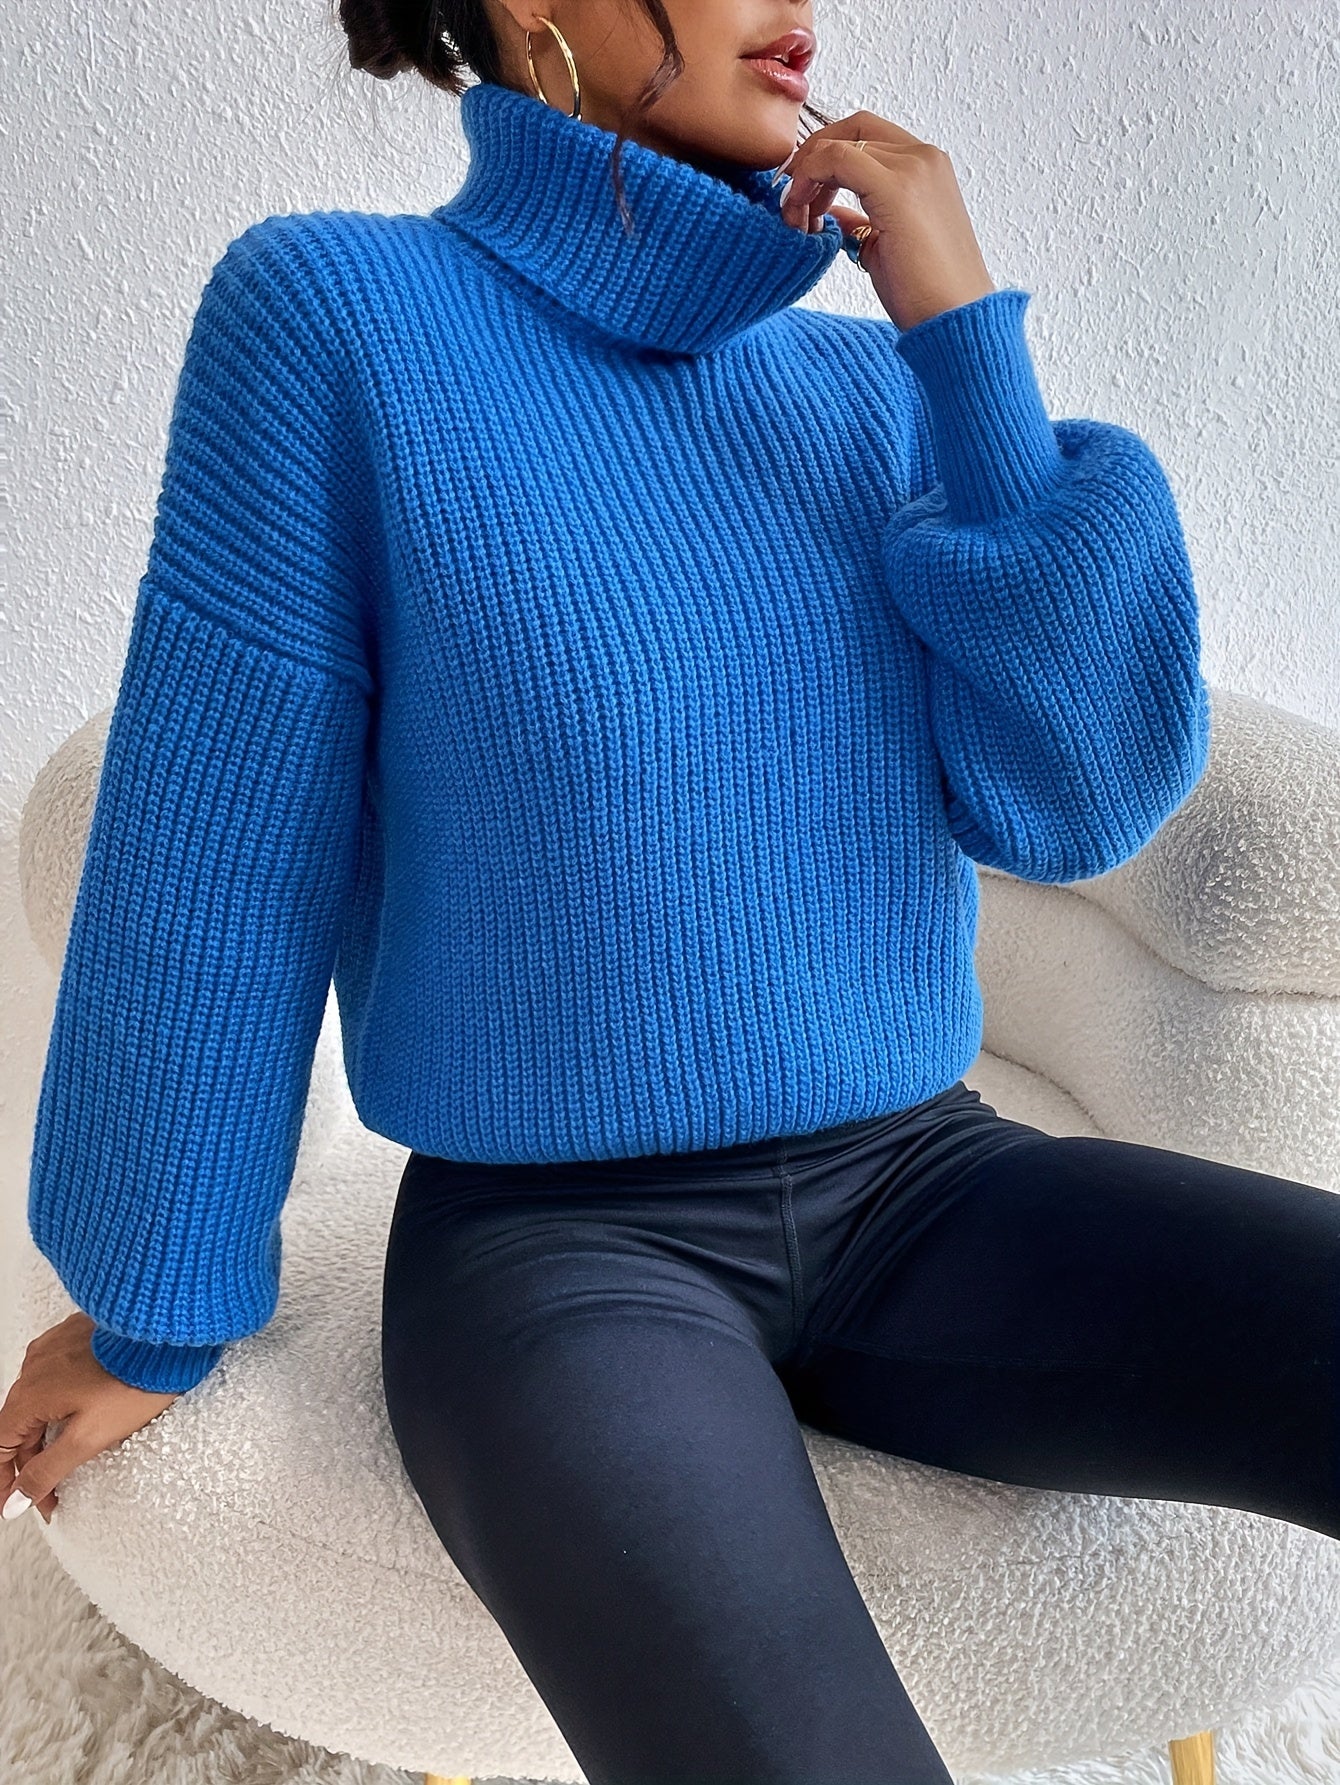 Vzyzv Solid Turtleneck Pullover Sweater, Elegant Long Sleeve Drop Shoulder Sweater, Women's Clothing